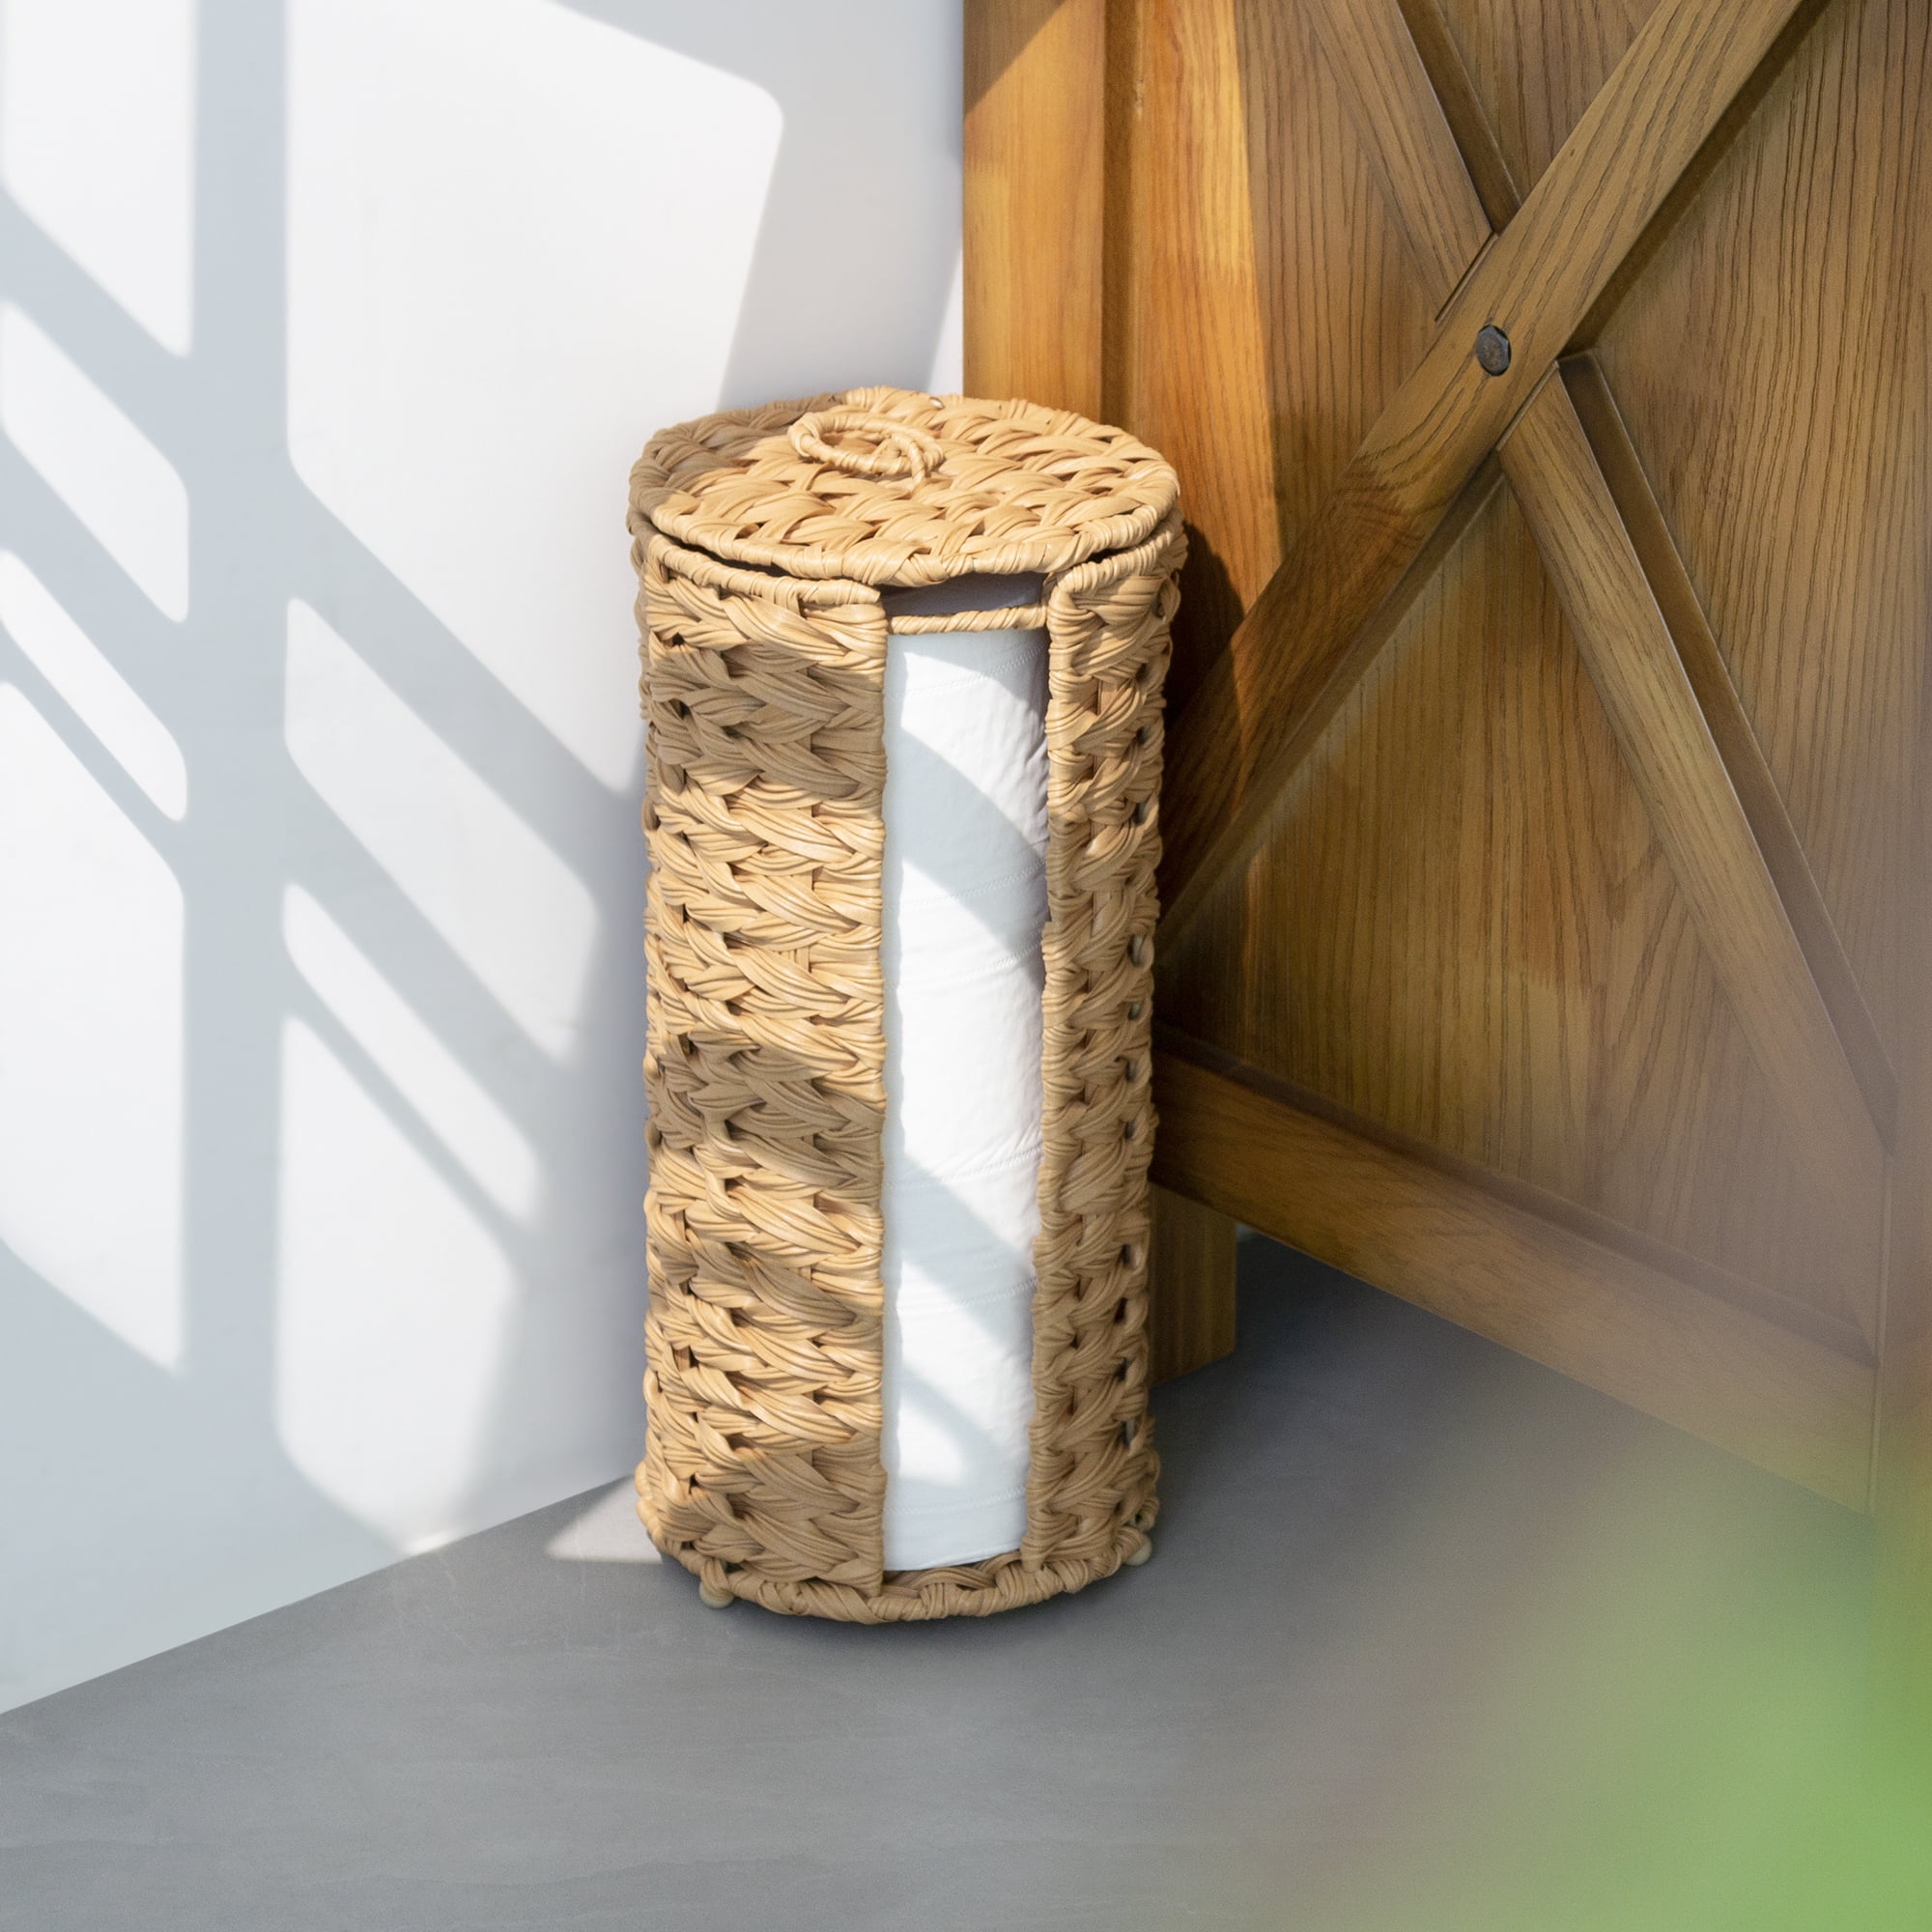 Freestanding Toilet Paper Holder with Storage,3 Rolls of Tissue Holder for  Bathroom,Handmade Woven Toilet Paper Roll Holder Stand,Rattan Sturdy Boho